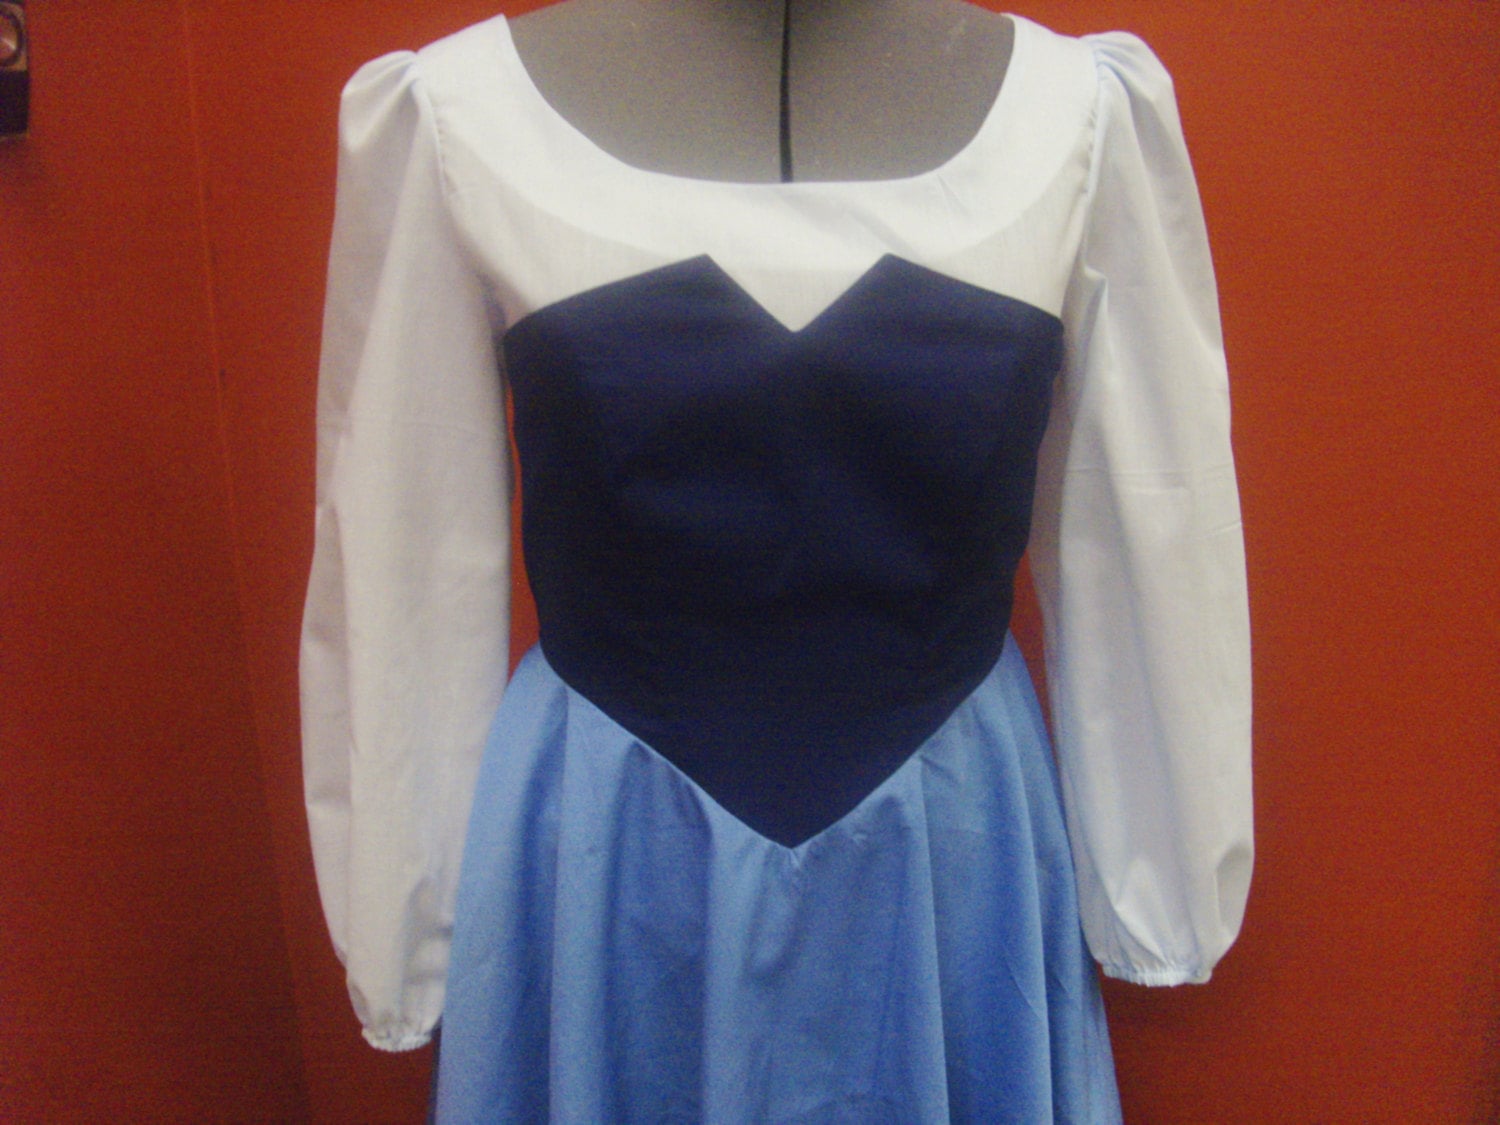 Belle S Blue Dress Costume